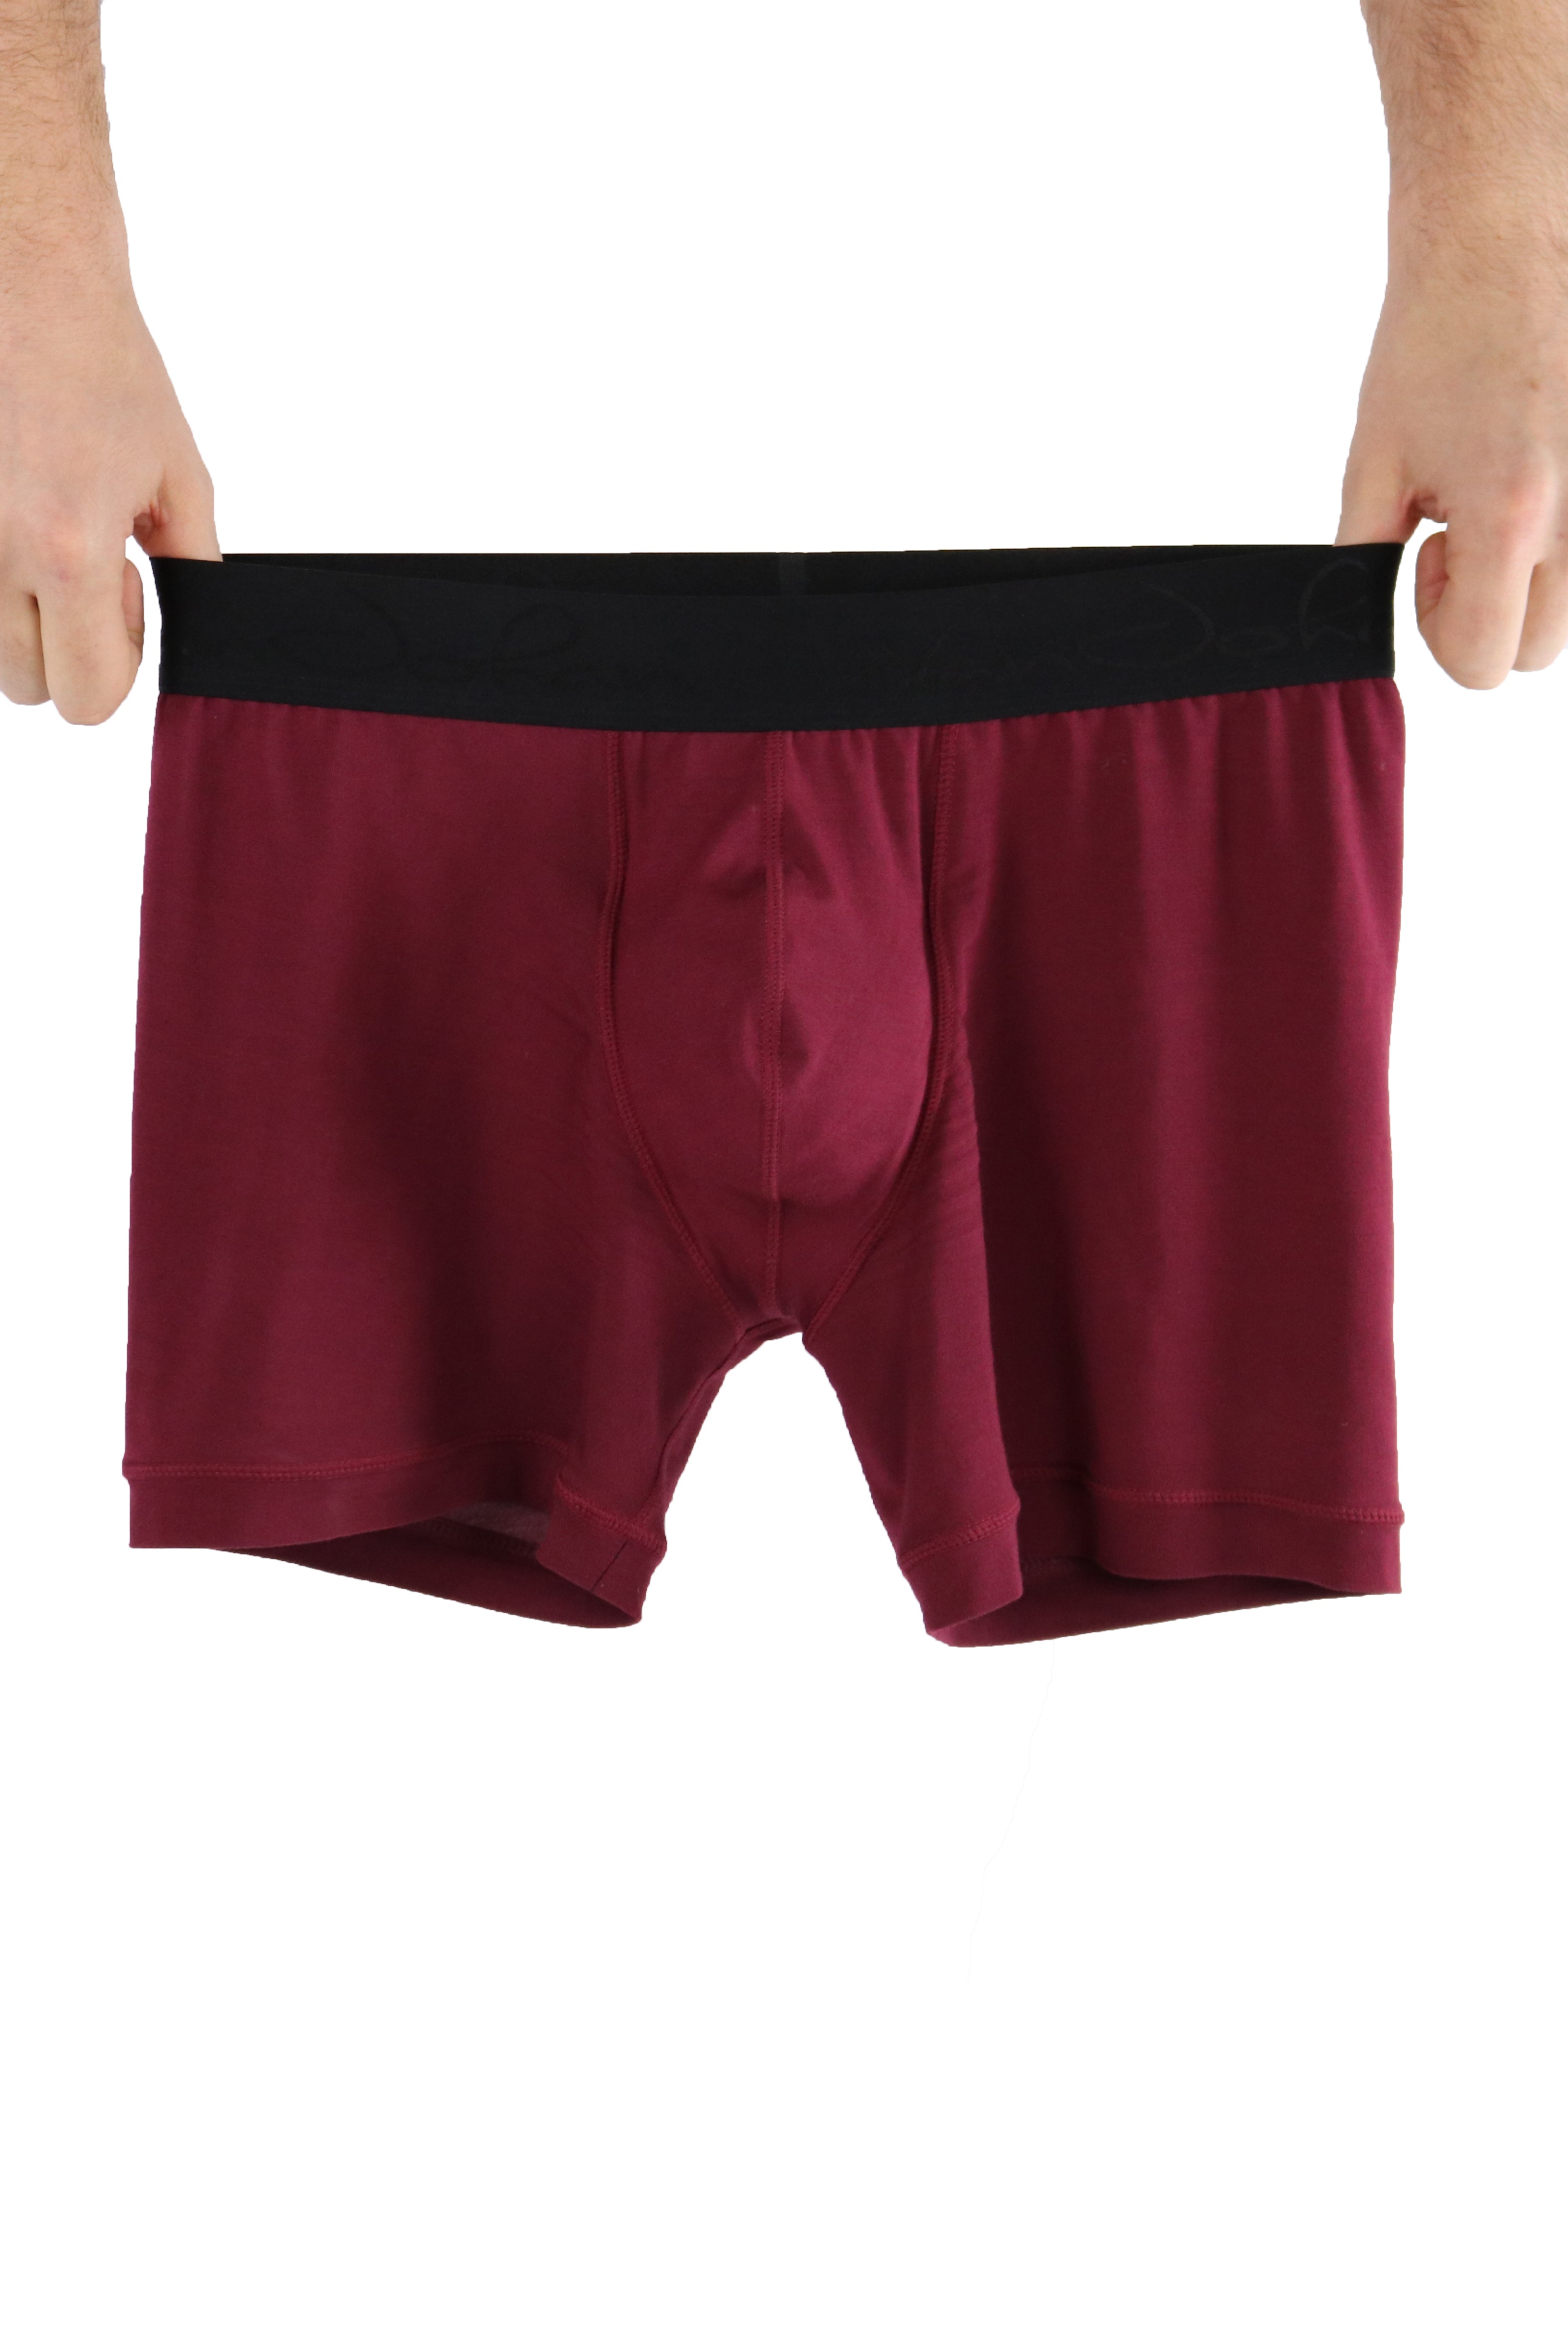 Deep Maroon Boxer Briefs | Best Mens Underwear for Sweating – VanJohan ...